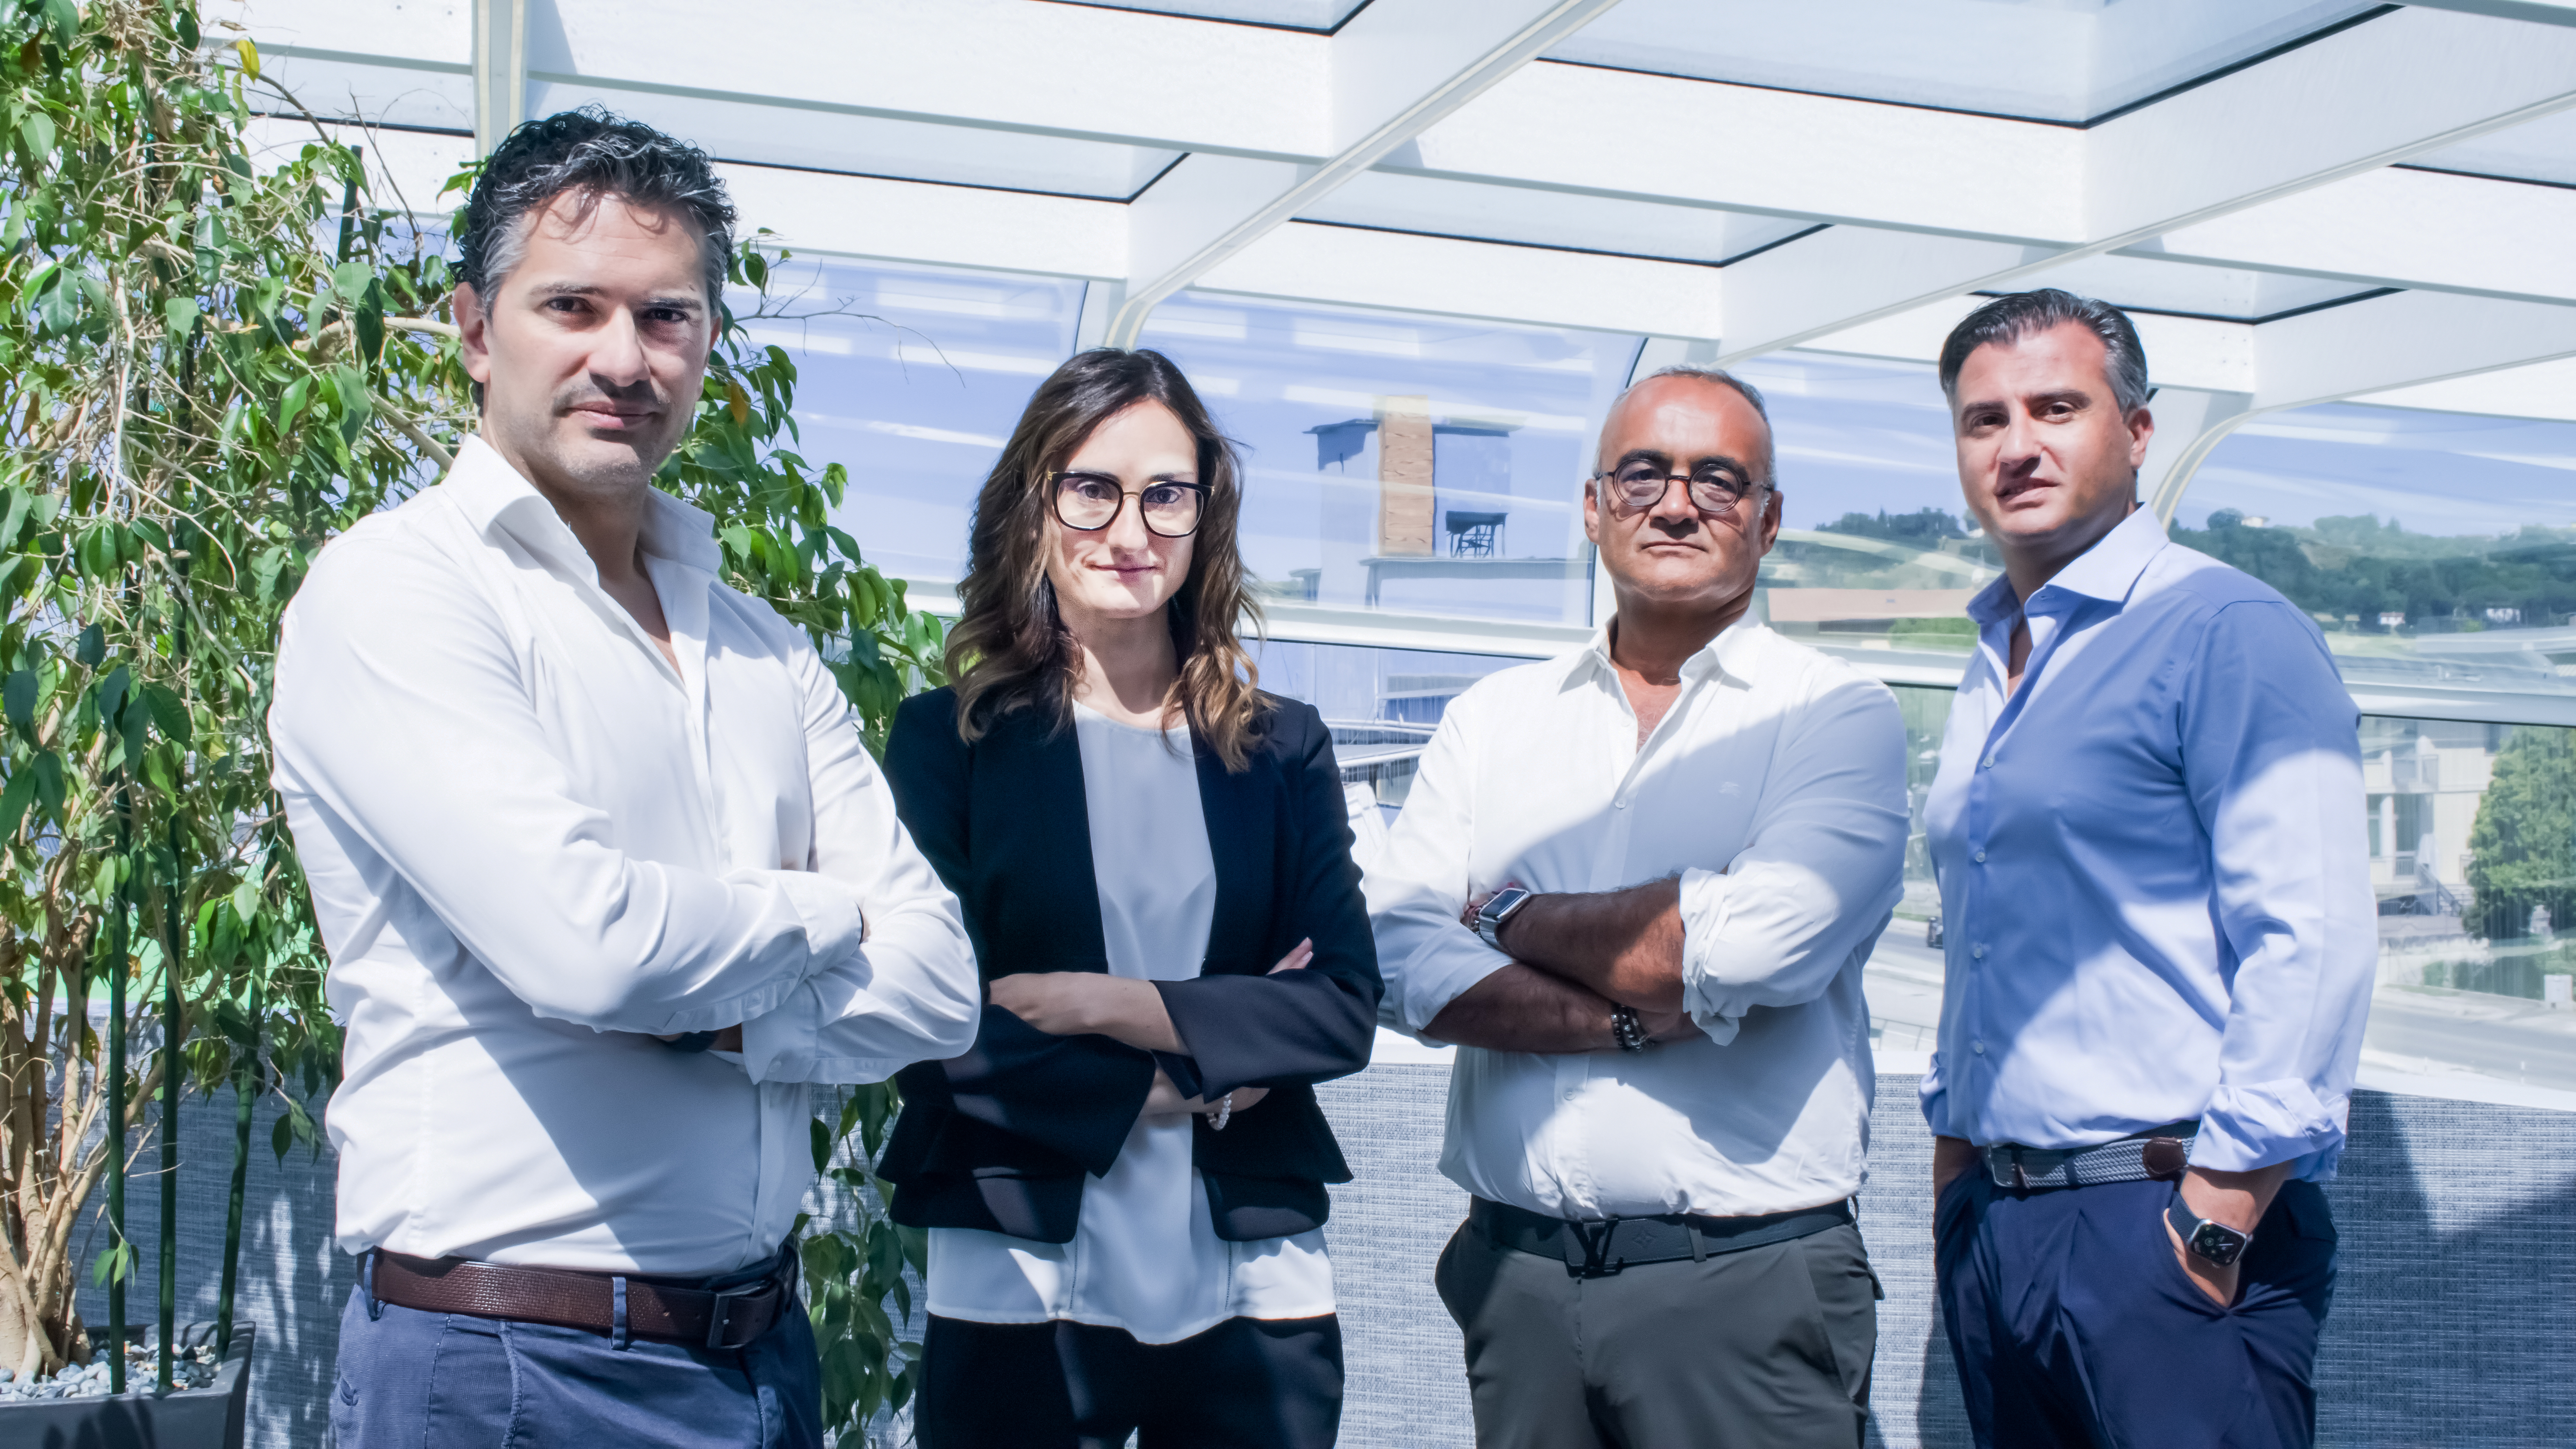 Da sinistra: Stefano Parcaroli, CEO Med Group, Lucia Parcaroli, Presidente Med Group, Maurizio Malara, CEO Rekordata, Alexander Cantore, CEO Juice